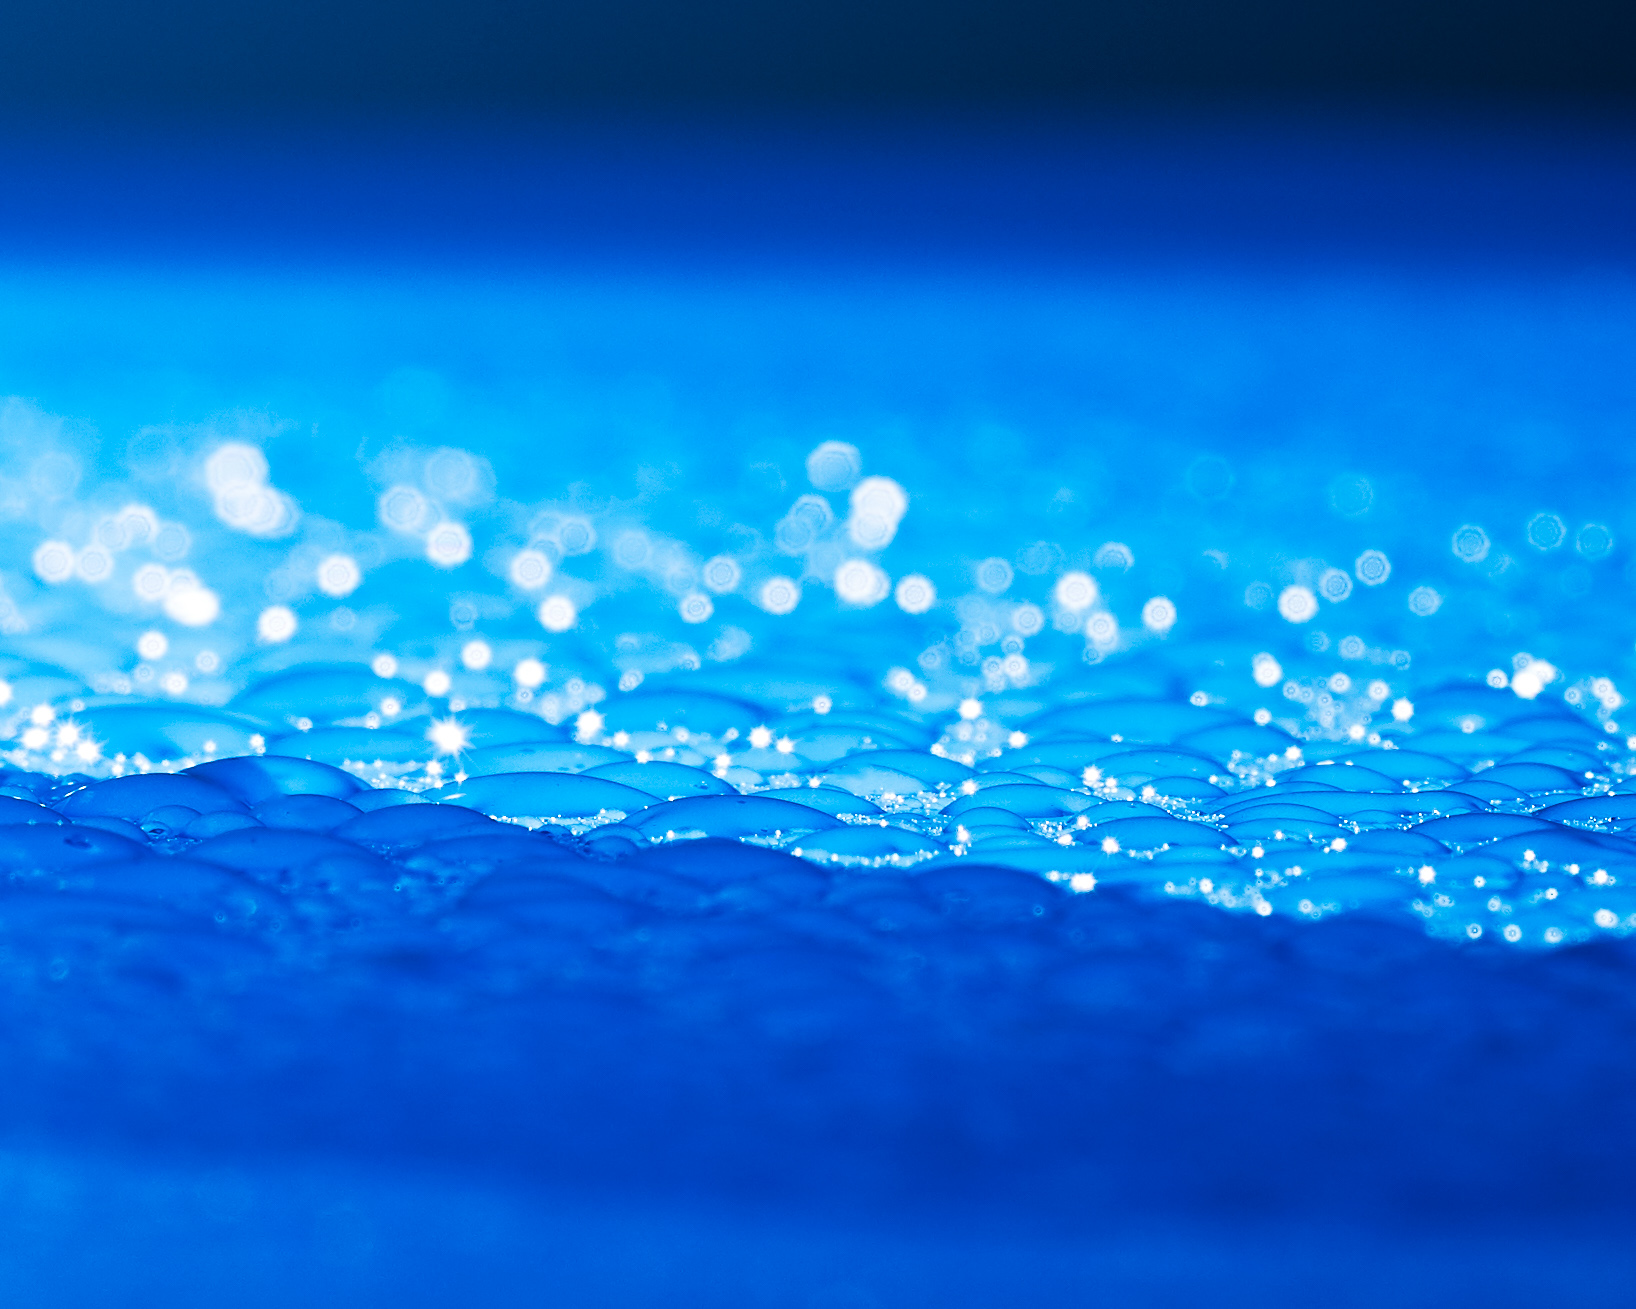 Wet Blue Drops